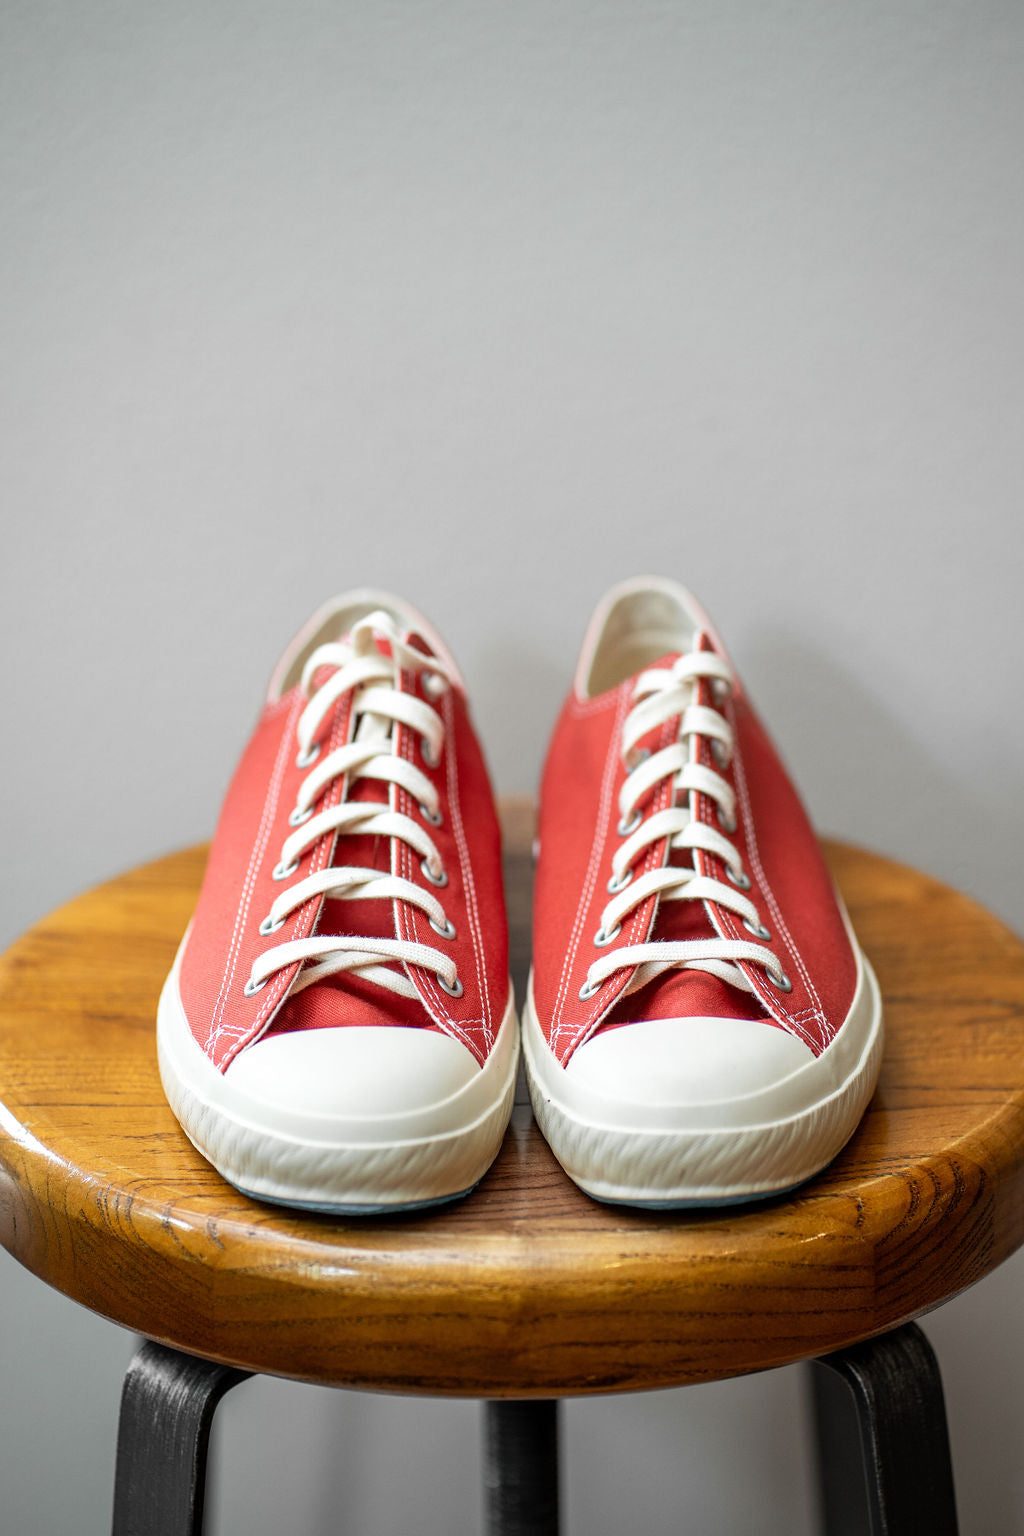 Shoes Like Pottery SLP01 JP Low Top Sneaker- Red